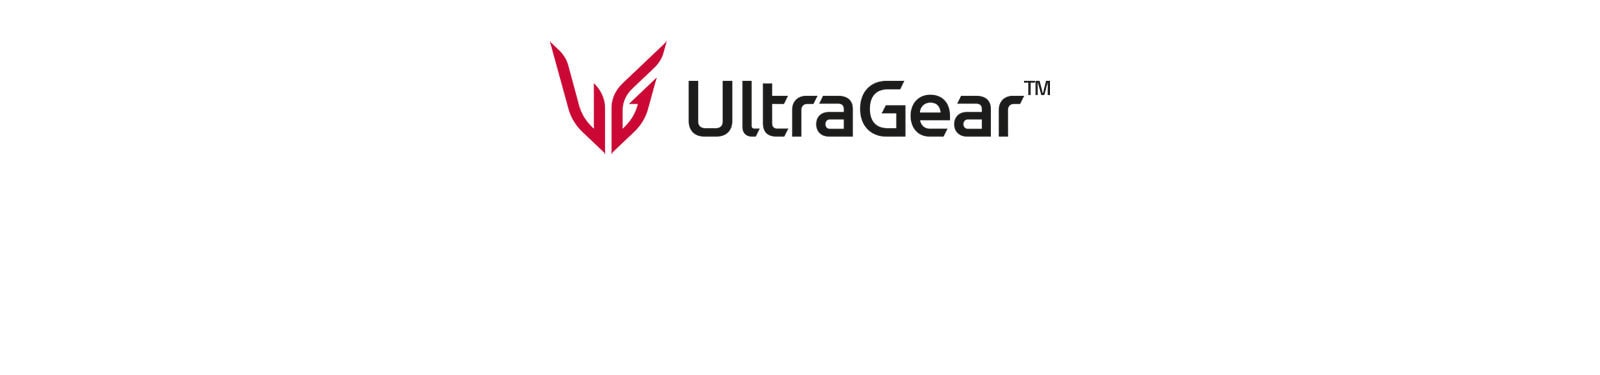 Логотип UltraGear™.	